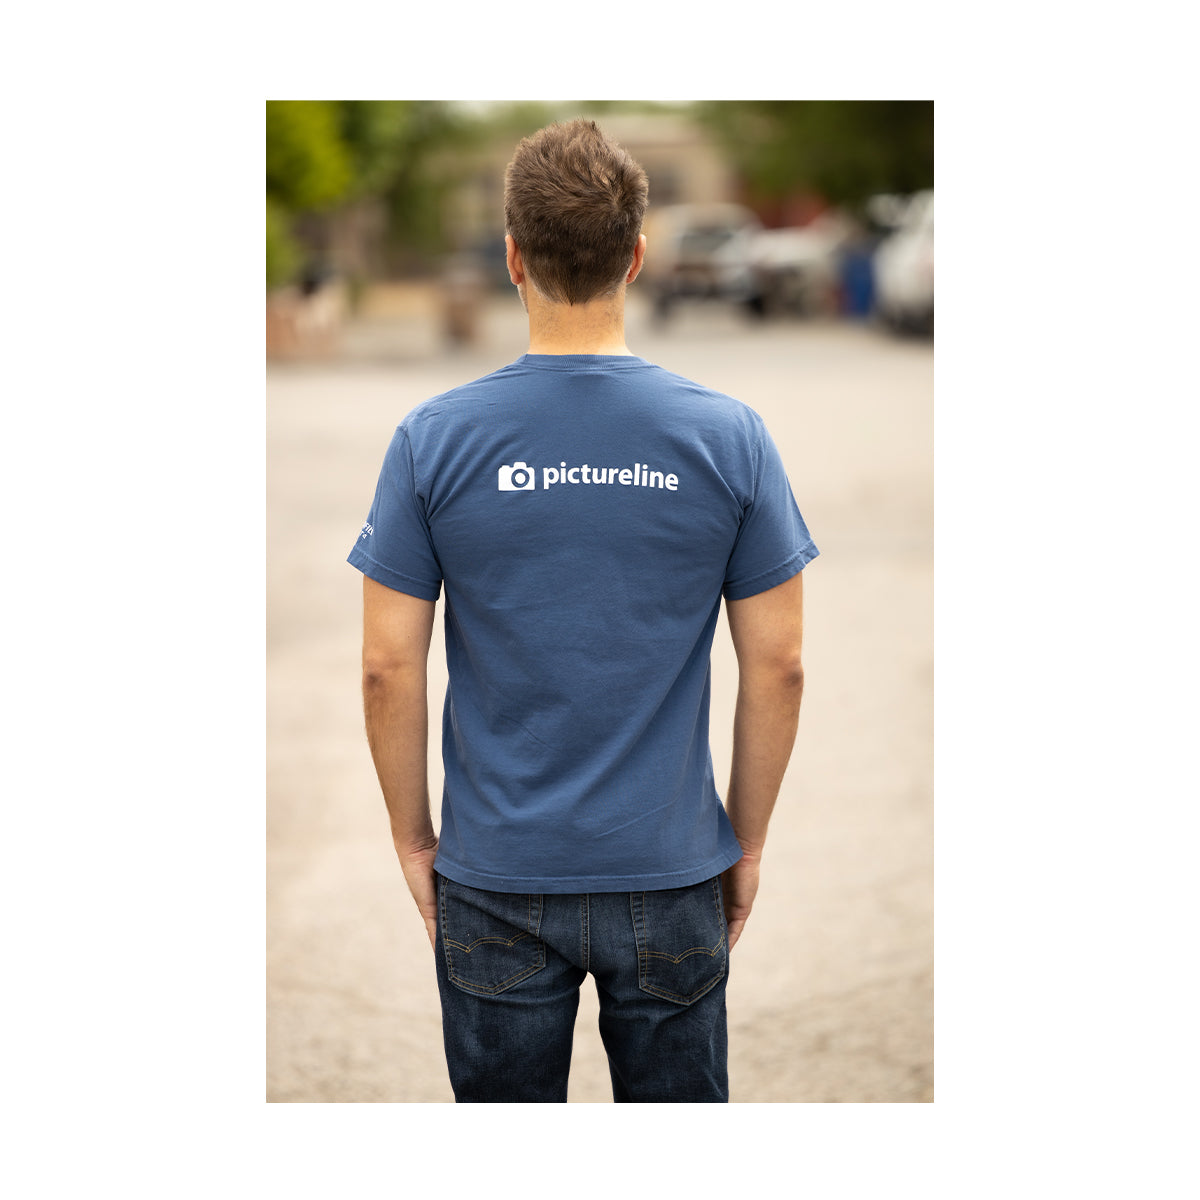 pictureline Apparel: Spring 2020 Short Sleeve Shirt Extra Large (Blue)